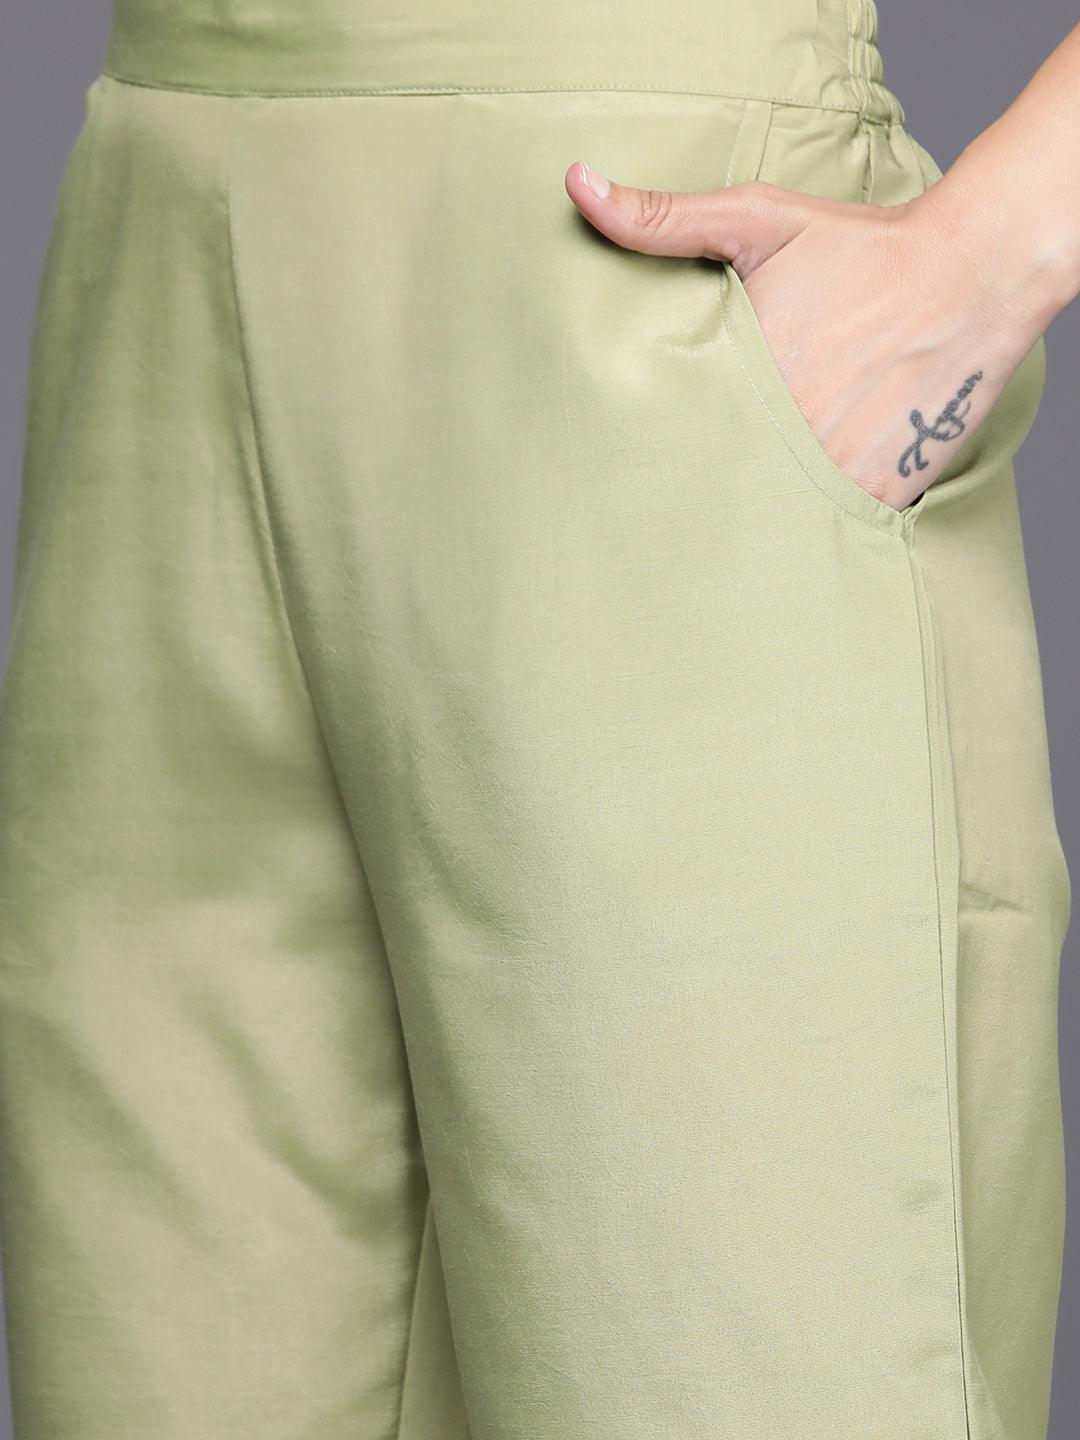 Olive Embroidered Chanderi Silk Straight Kurta With Trousers & Dupatta - Libas